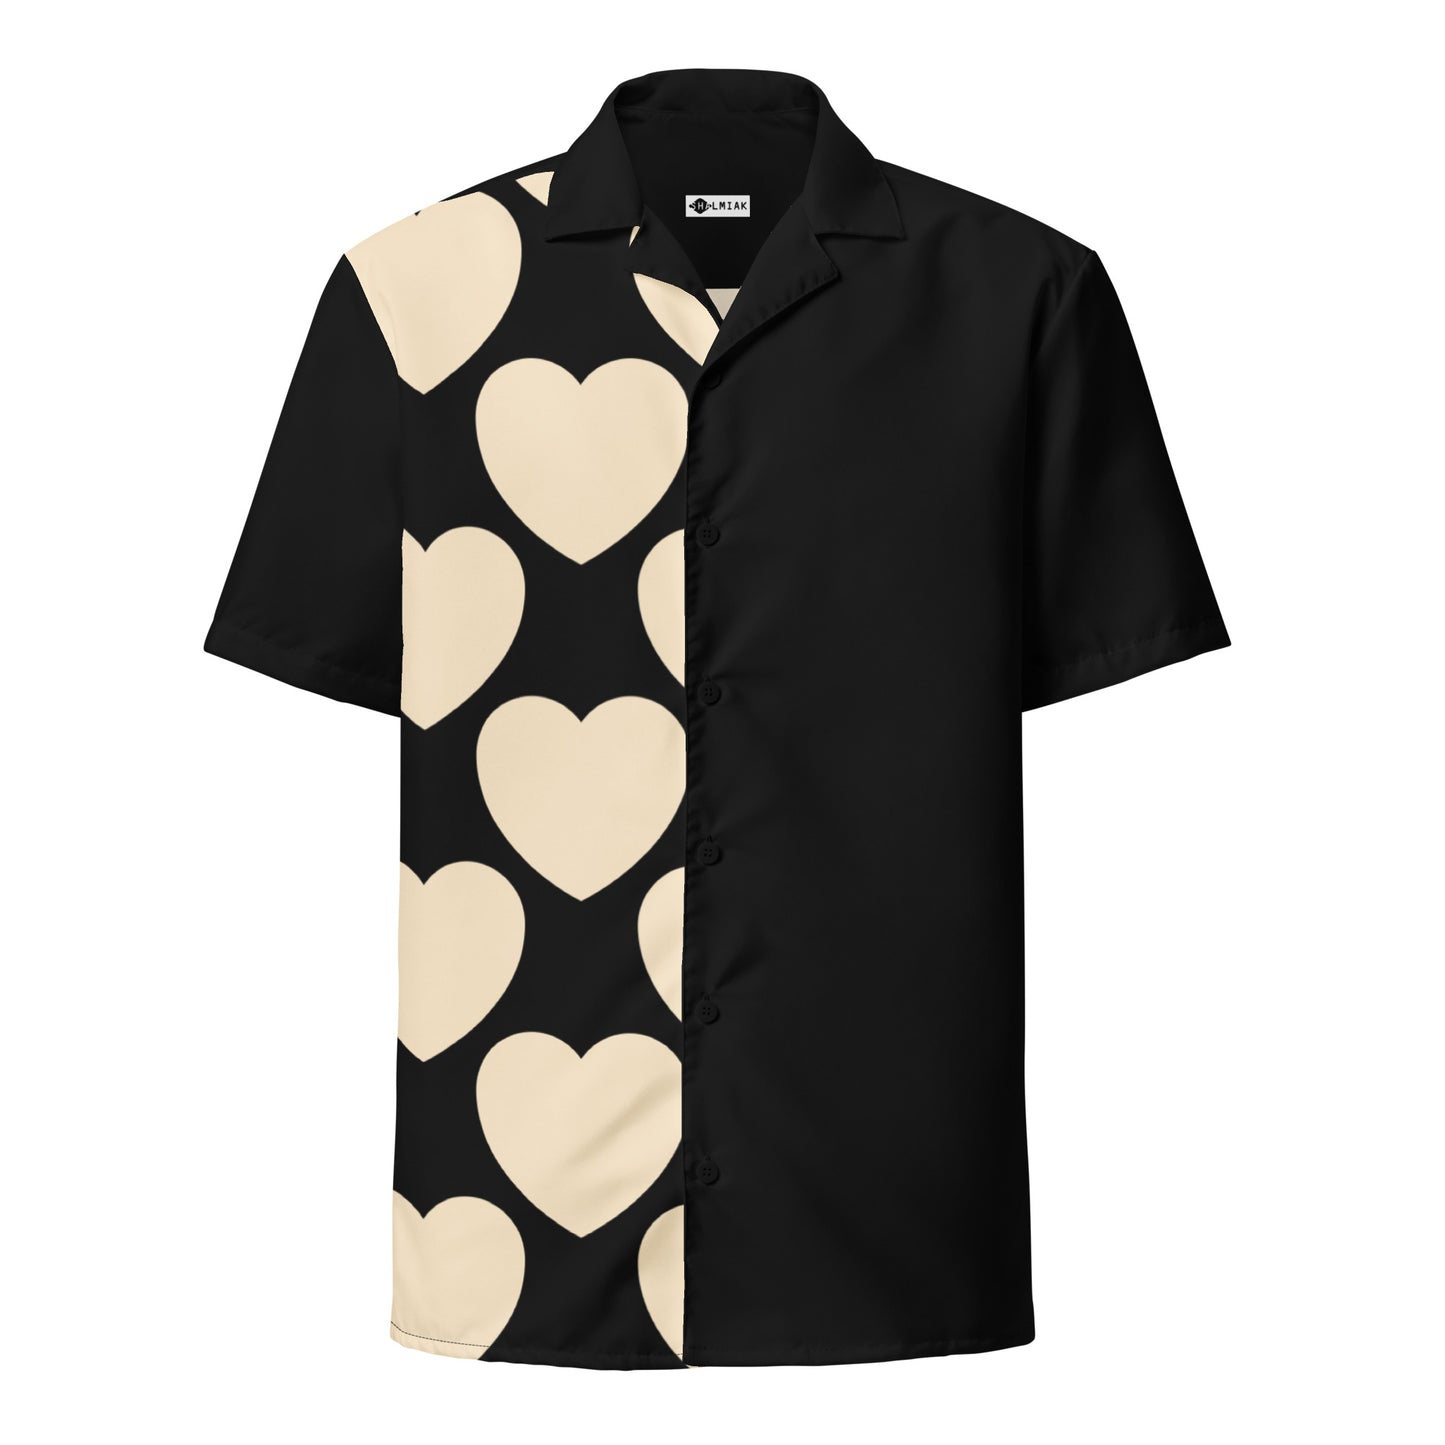 ELLIE LOVE black -2- Unisex button shirt